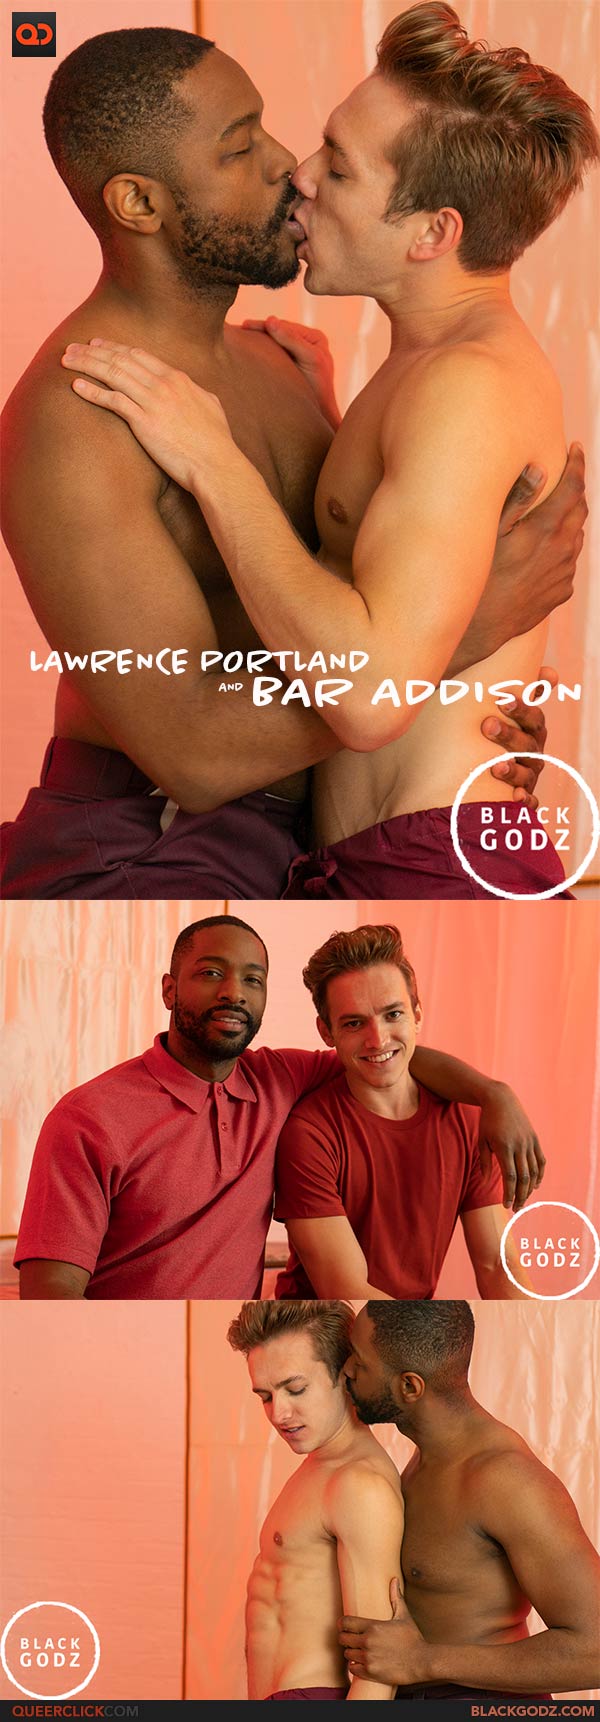 Black Godz: Lawrence Portland and Bar Addison